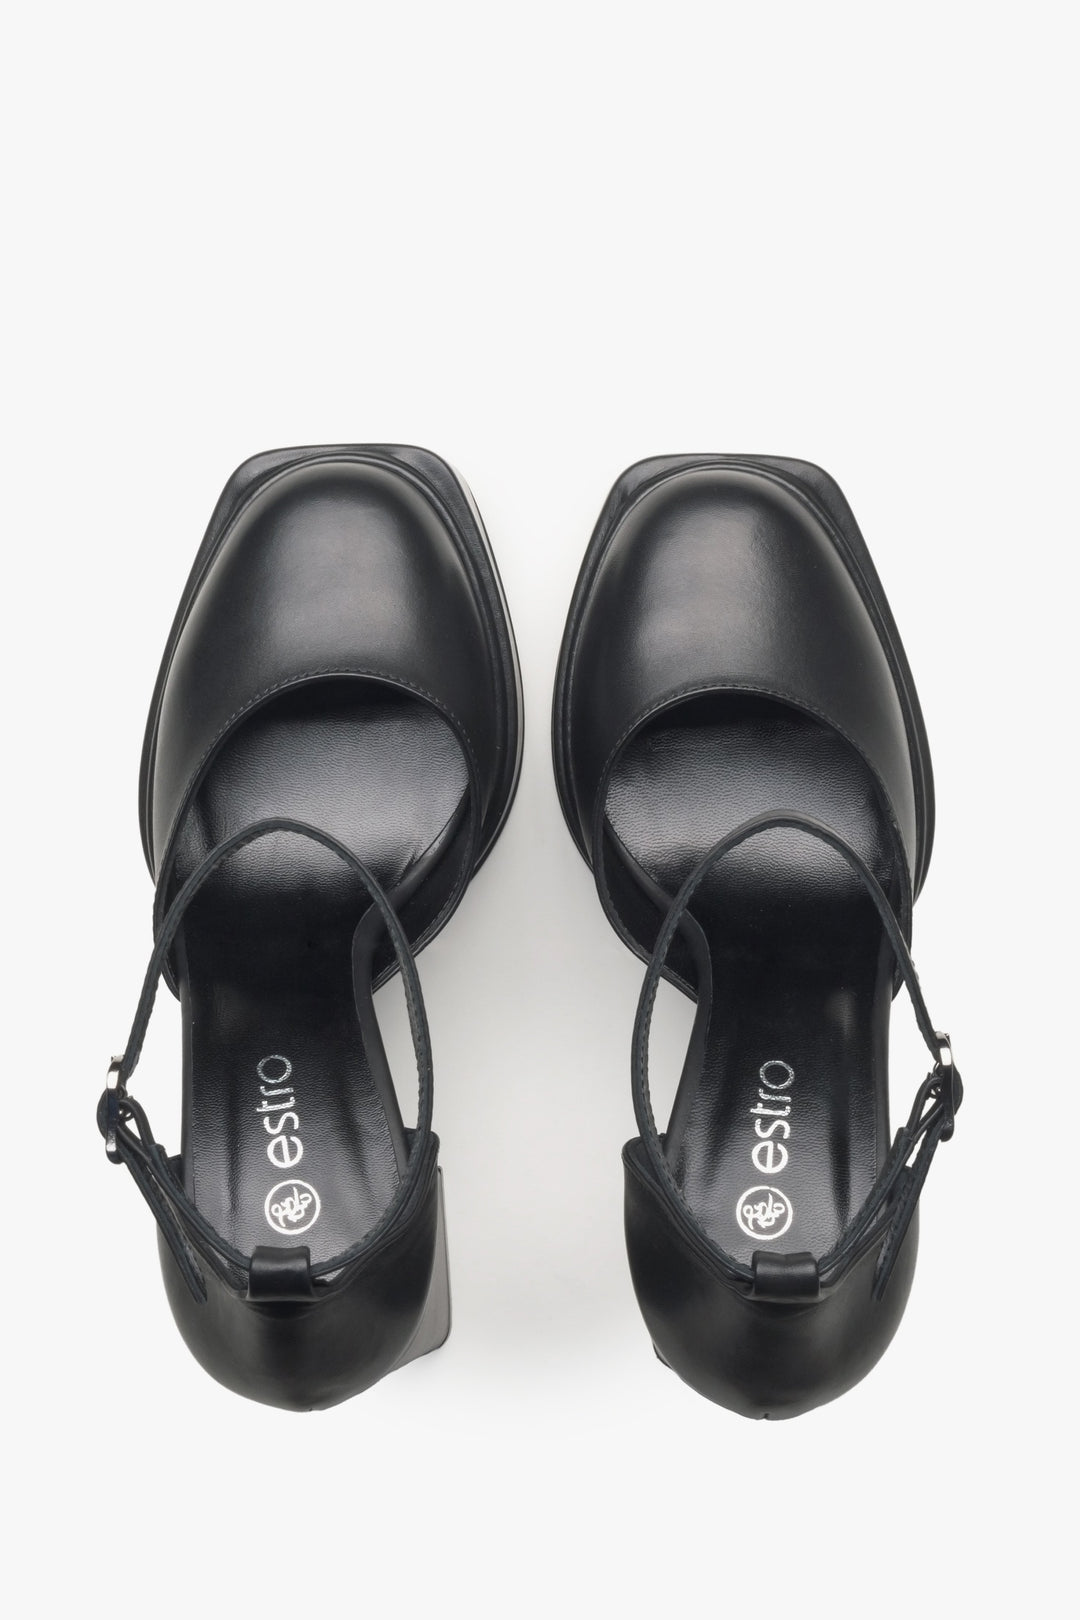 Women's platform sandals Estro in black.